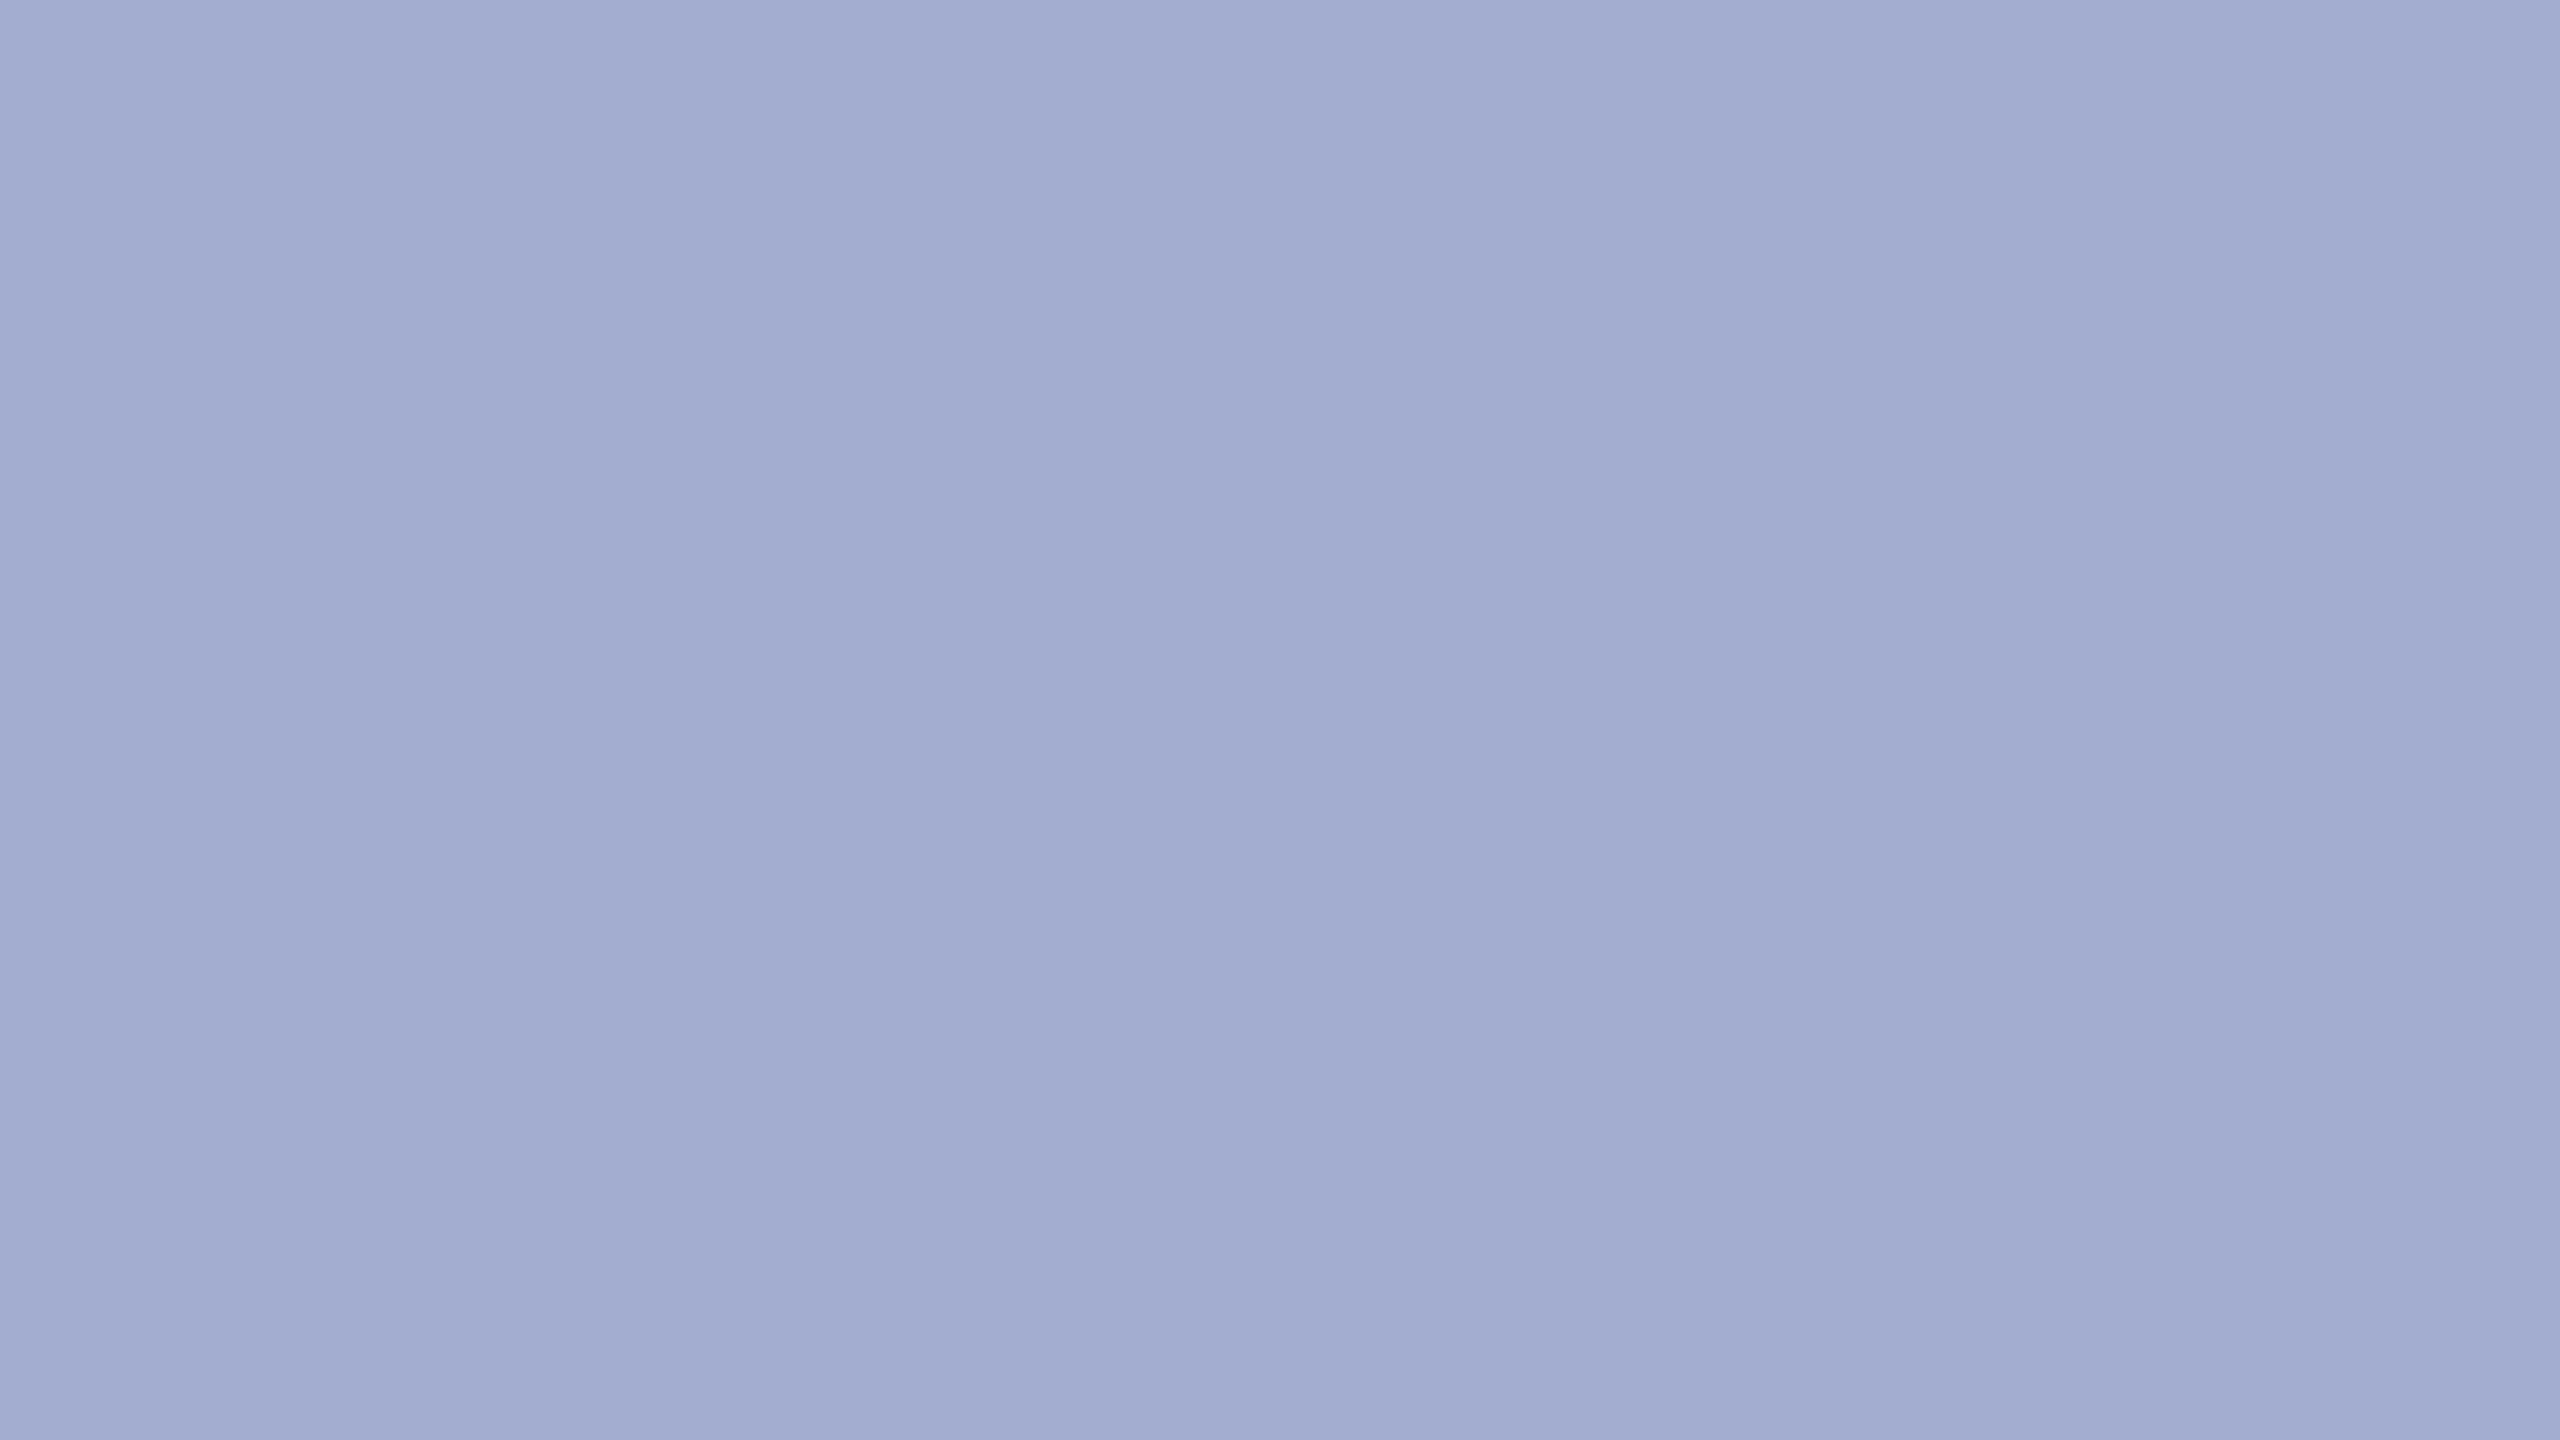 2560x1440 Wild Blue Yonder Solid Color Background